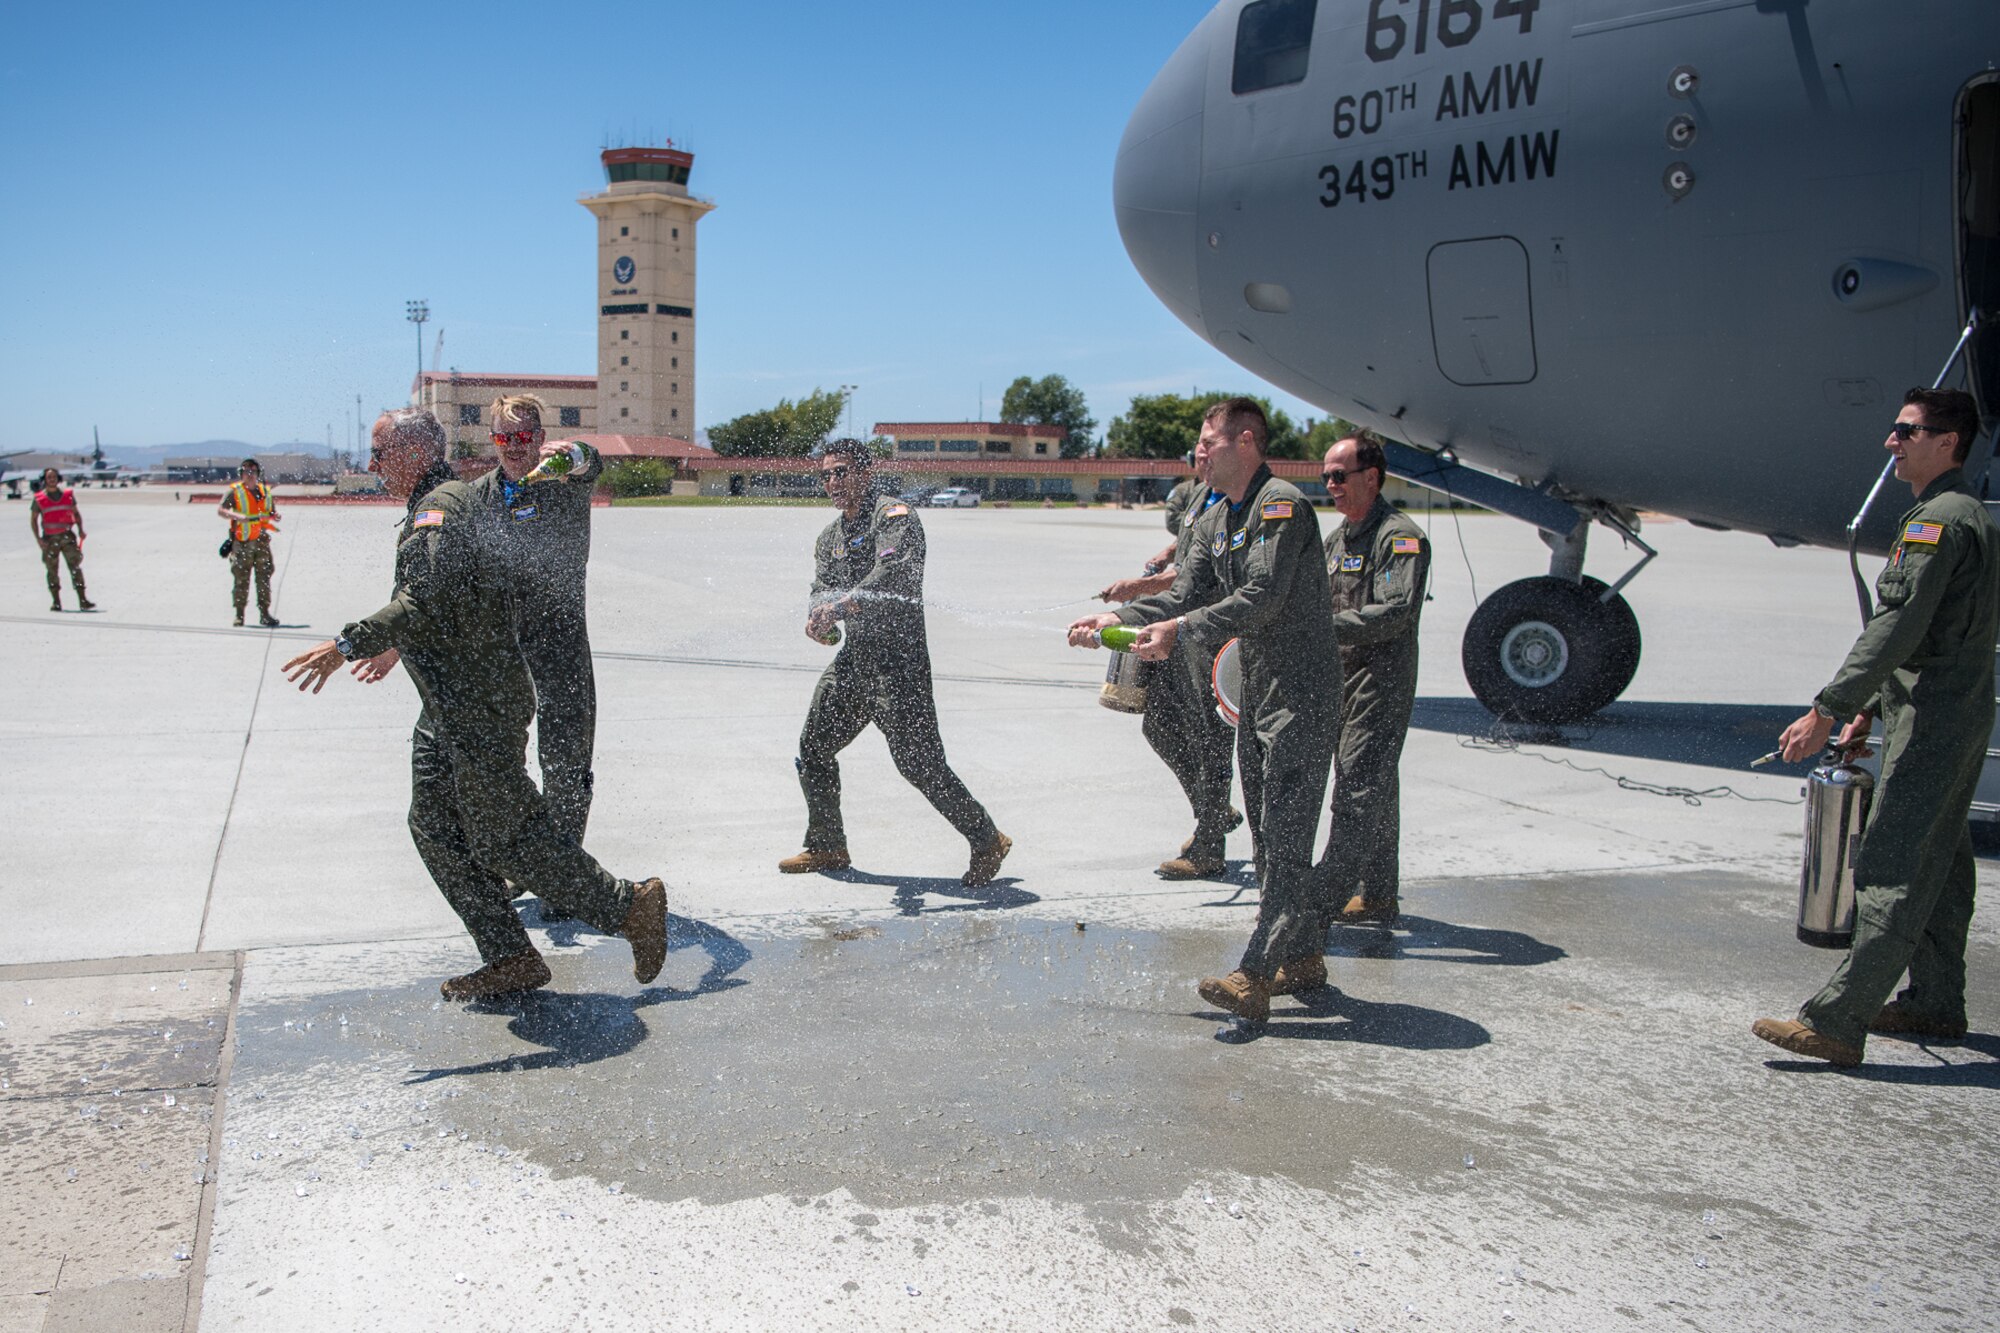 Lt. Col. Bill Wickersham and Senior Master Sgt. John Moore take their final flights.